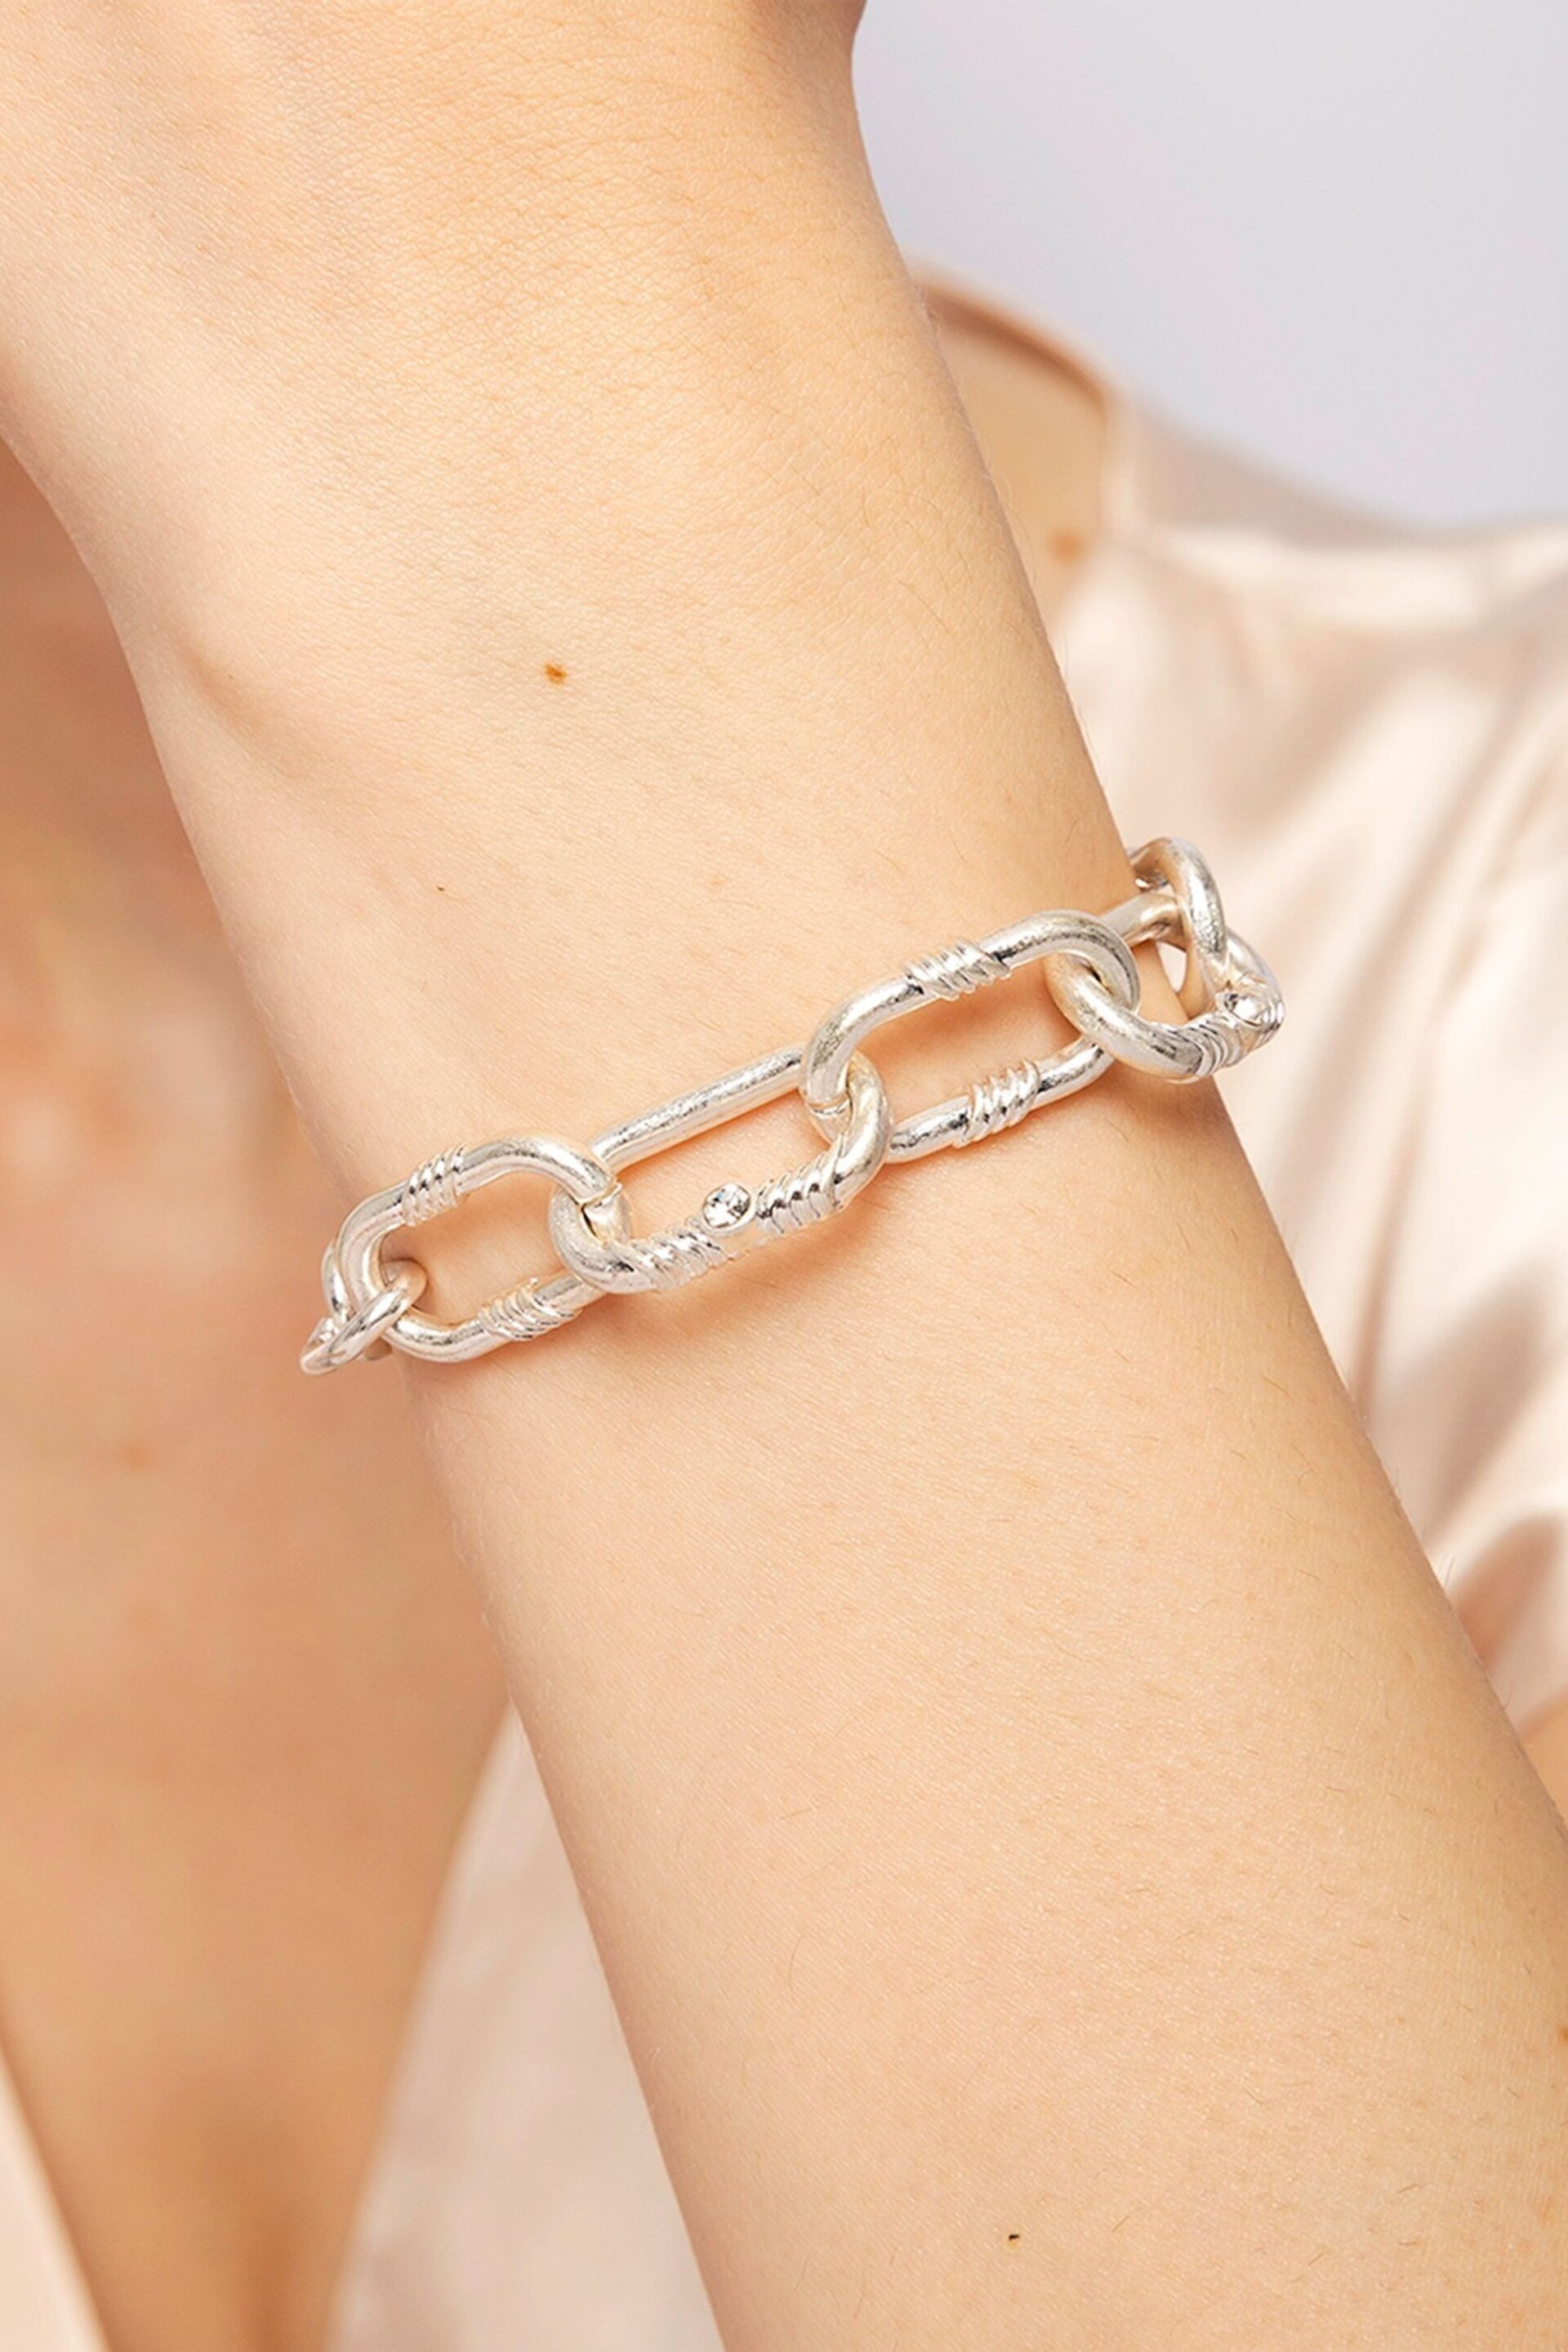 Bibi Bijoux Silver Tone 'Courage' Chunky Chain Bracelet - Image 1 of 2